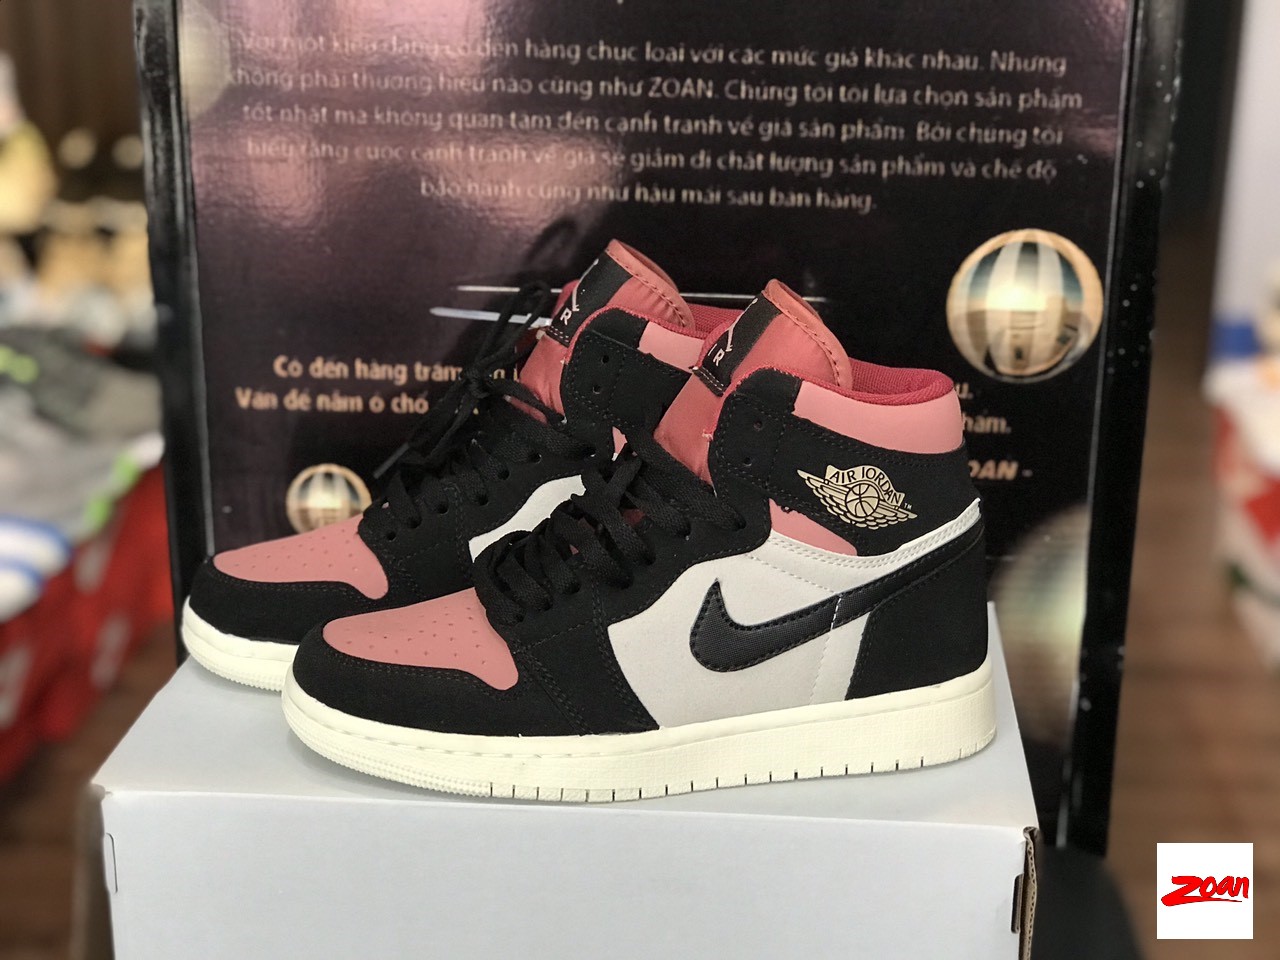 Nike Jordan 1 cao cổ đen hồng, Nike Jordan 1 nữ